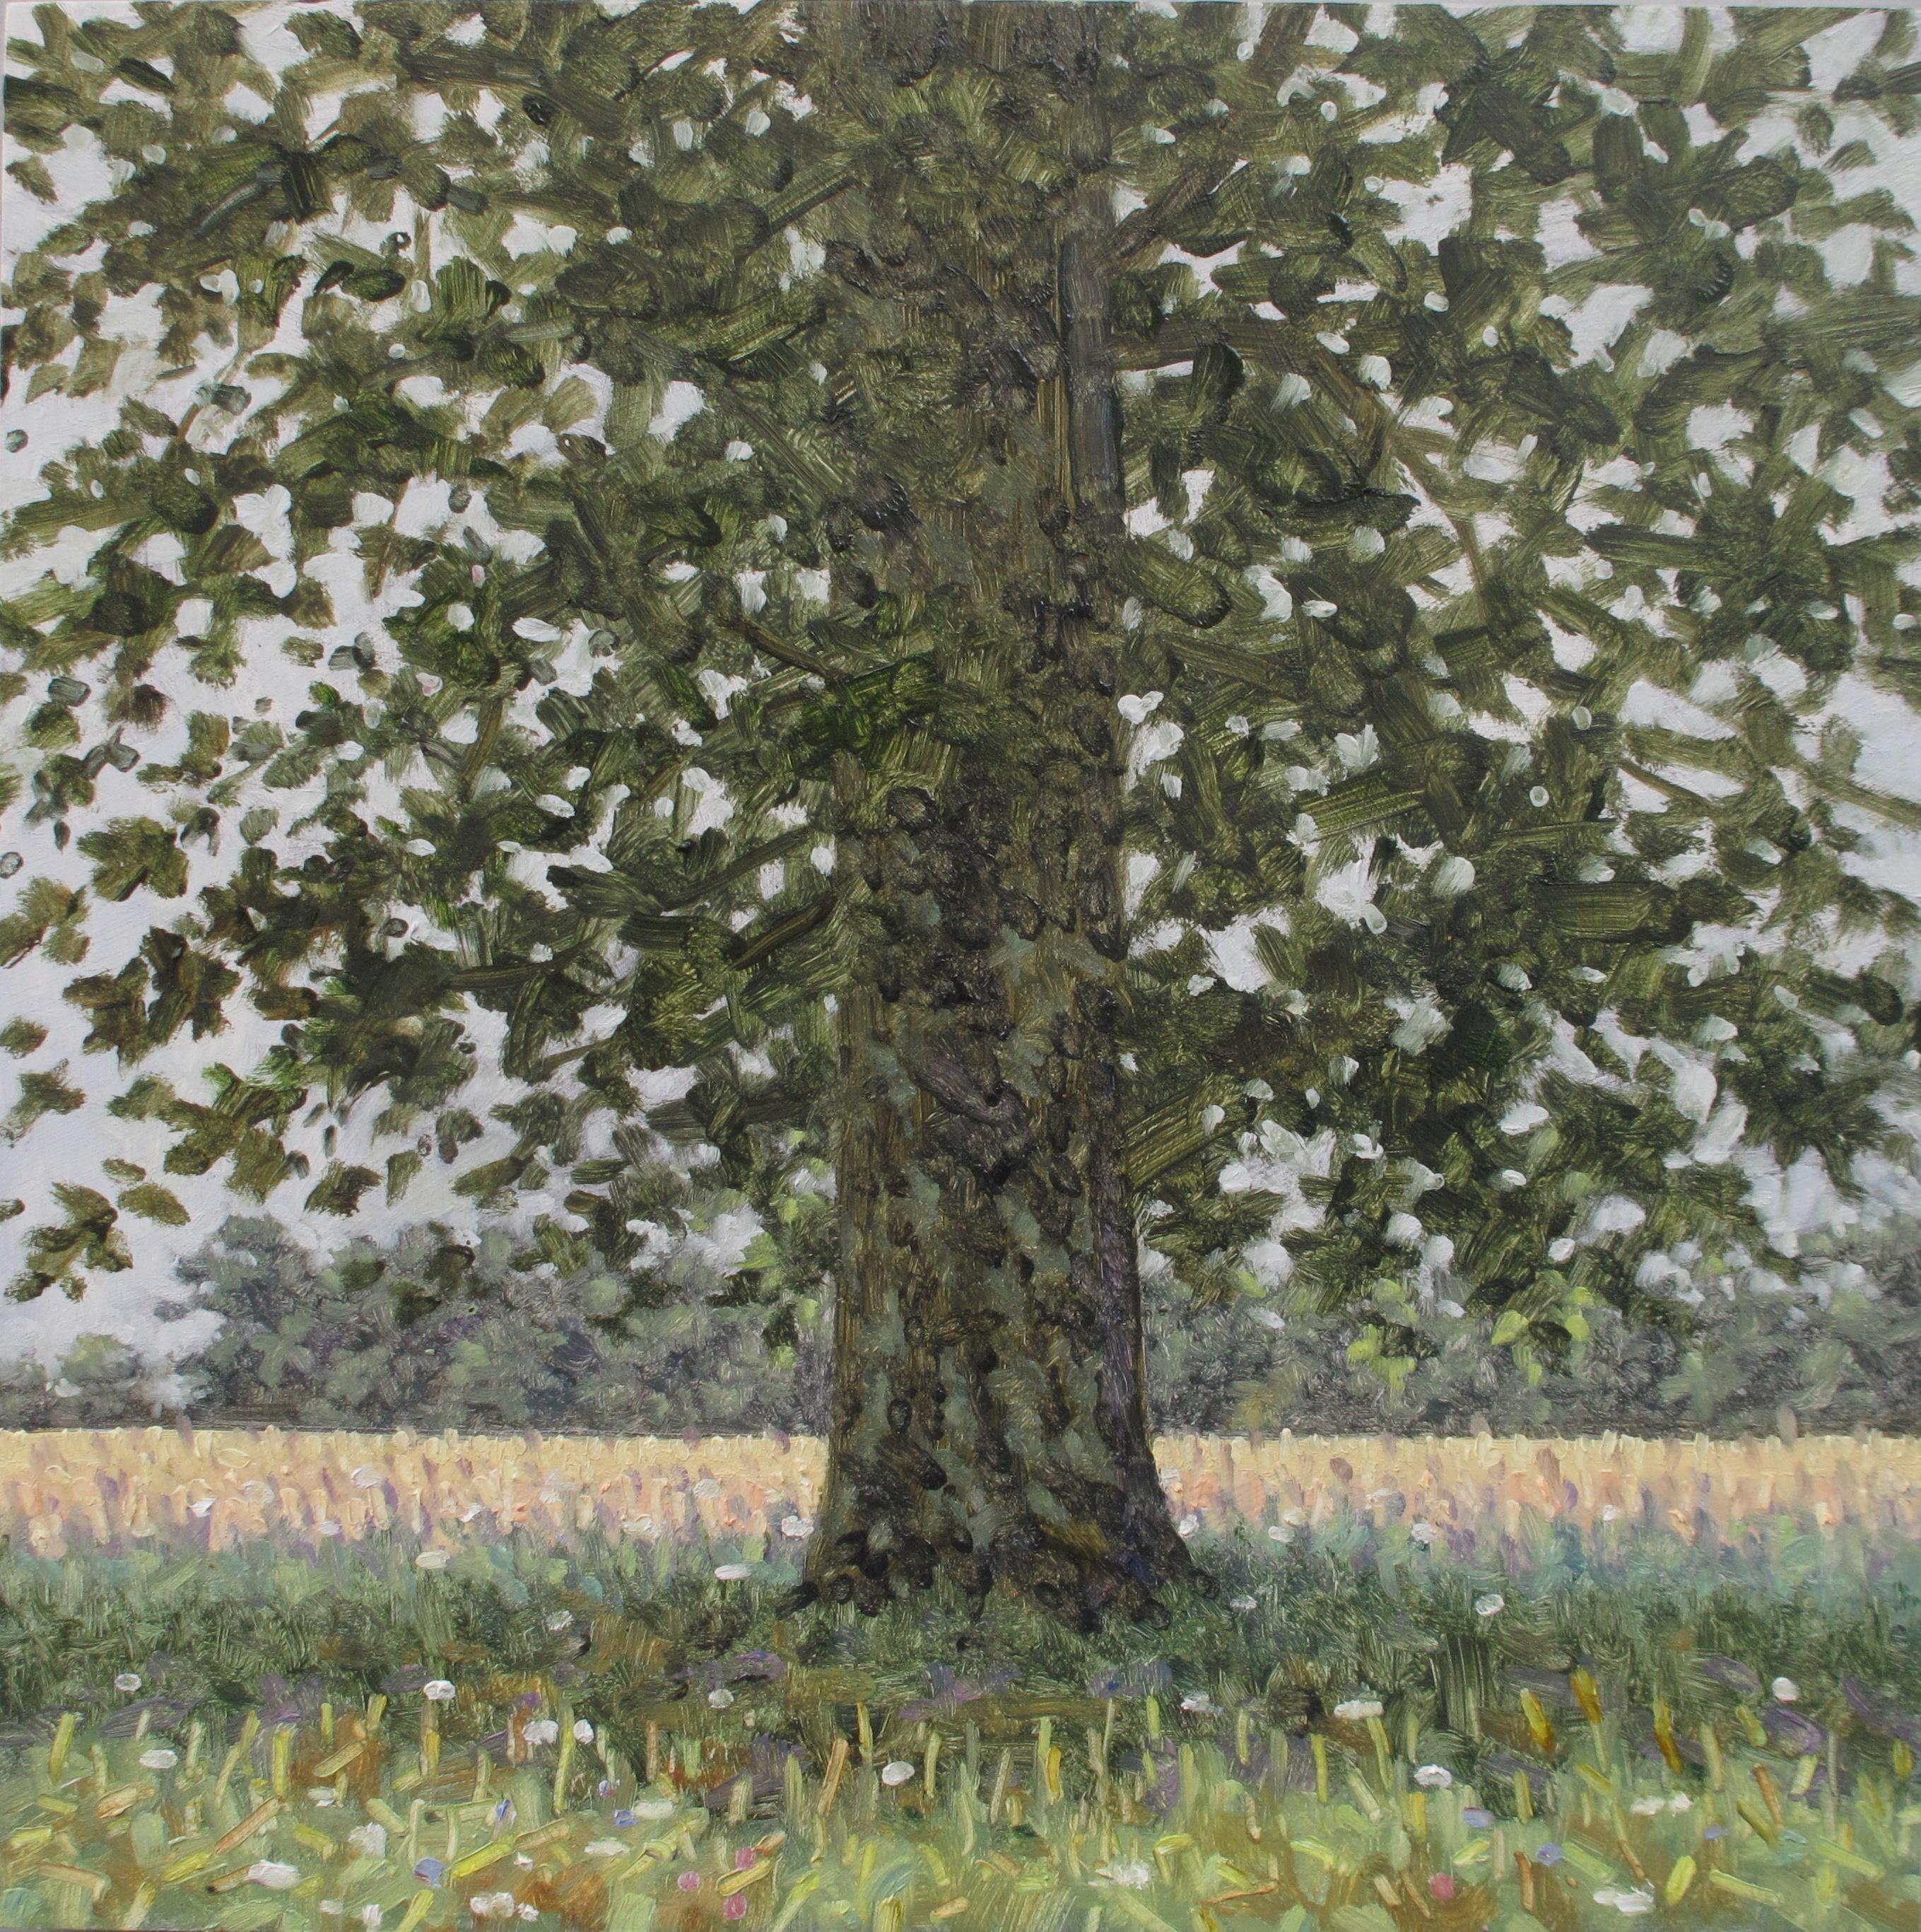 Thomas Sarrantonio Landscape Painting - Field Painting August 13 2020, Botanical Landscape, Green Tree in Field